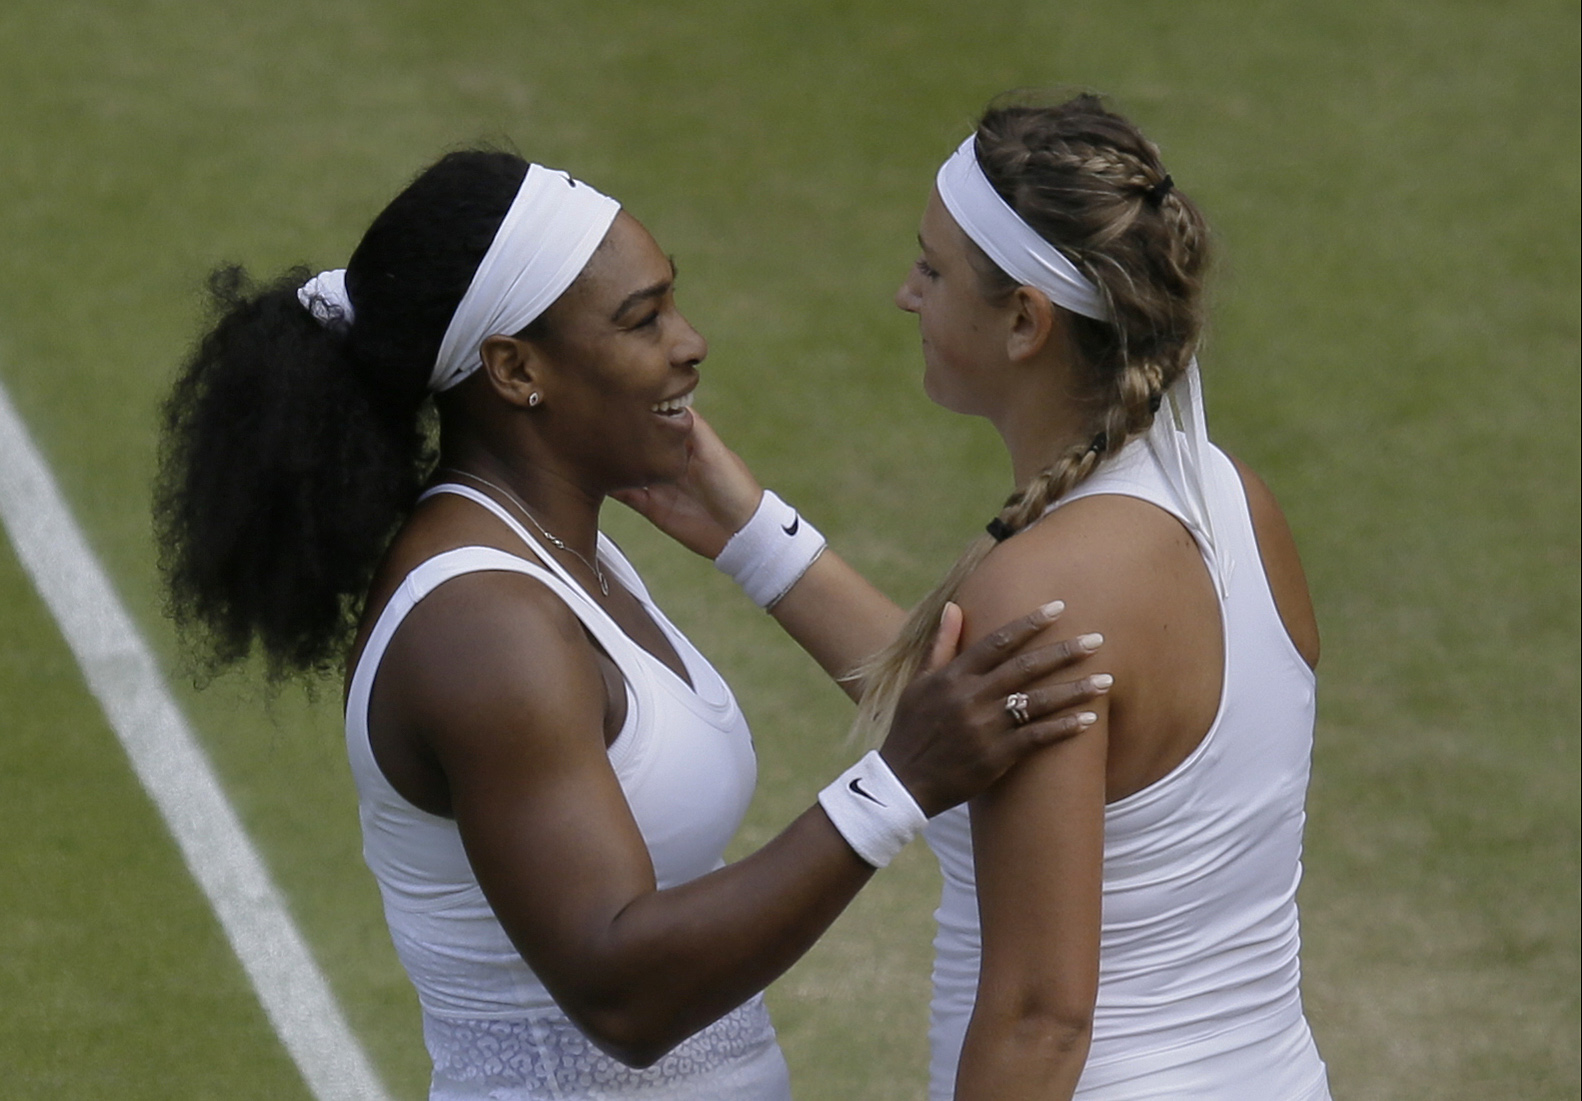 Serena Williams and Victoria Azarenka after the match. Photo: AP